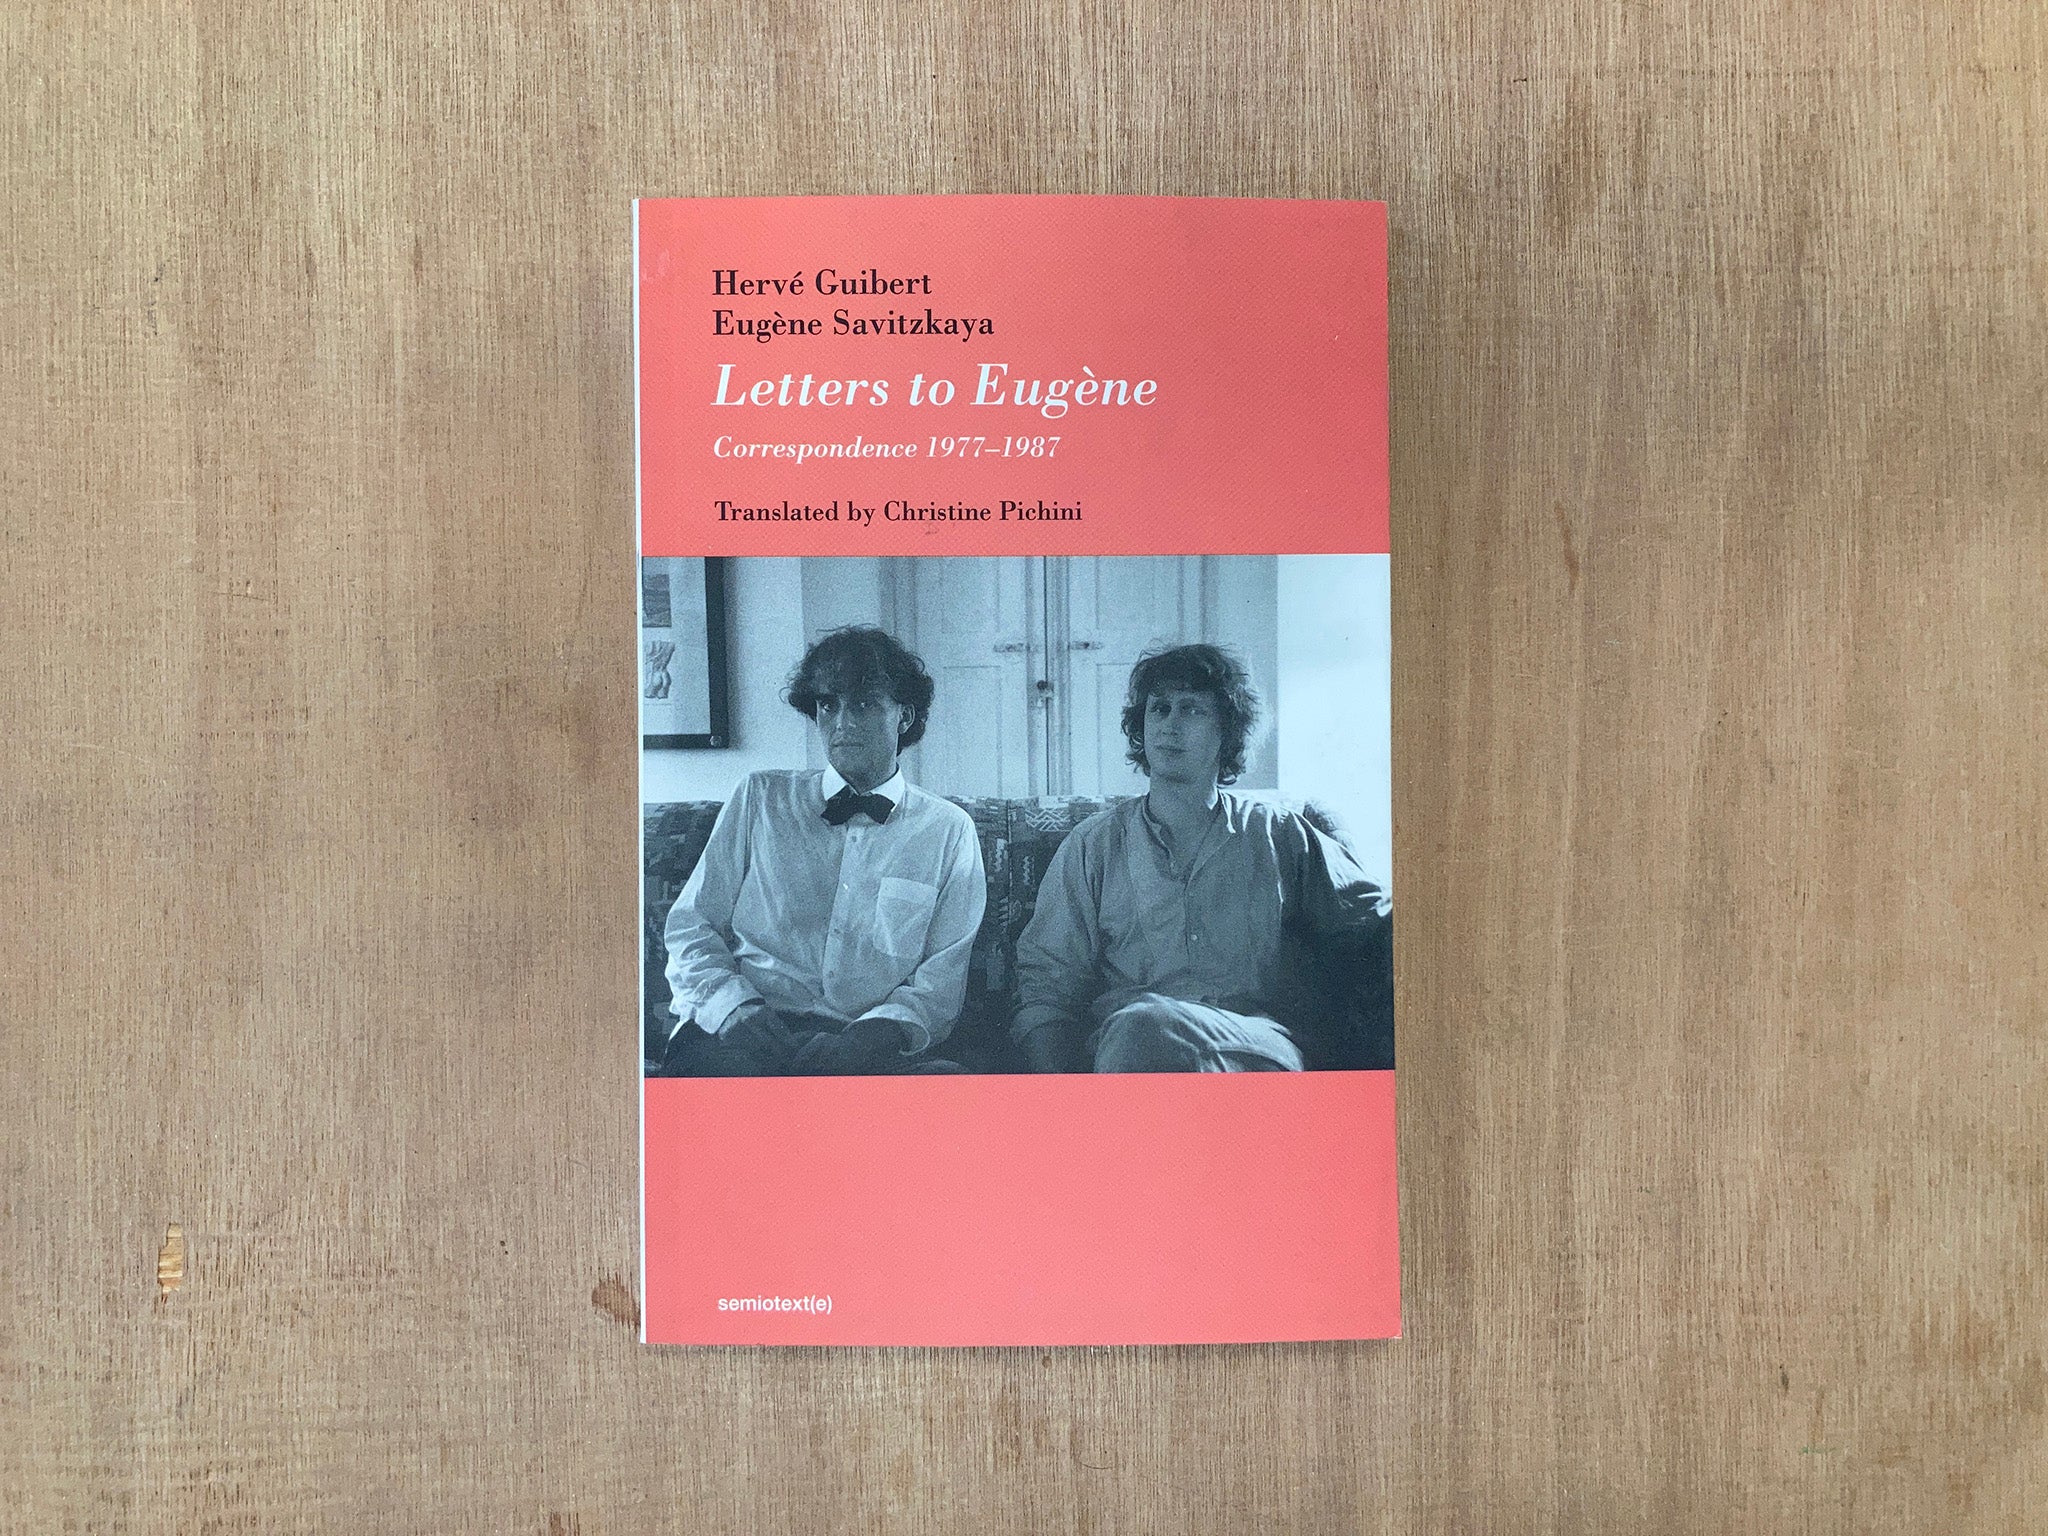 LETTERS TO EUGÈNE: CORRESPONDENCE 1977–1987 by Hervé Guibert and Eugène Savitzkaya